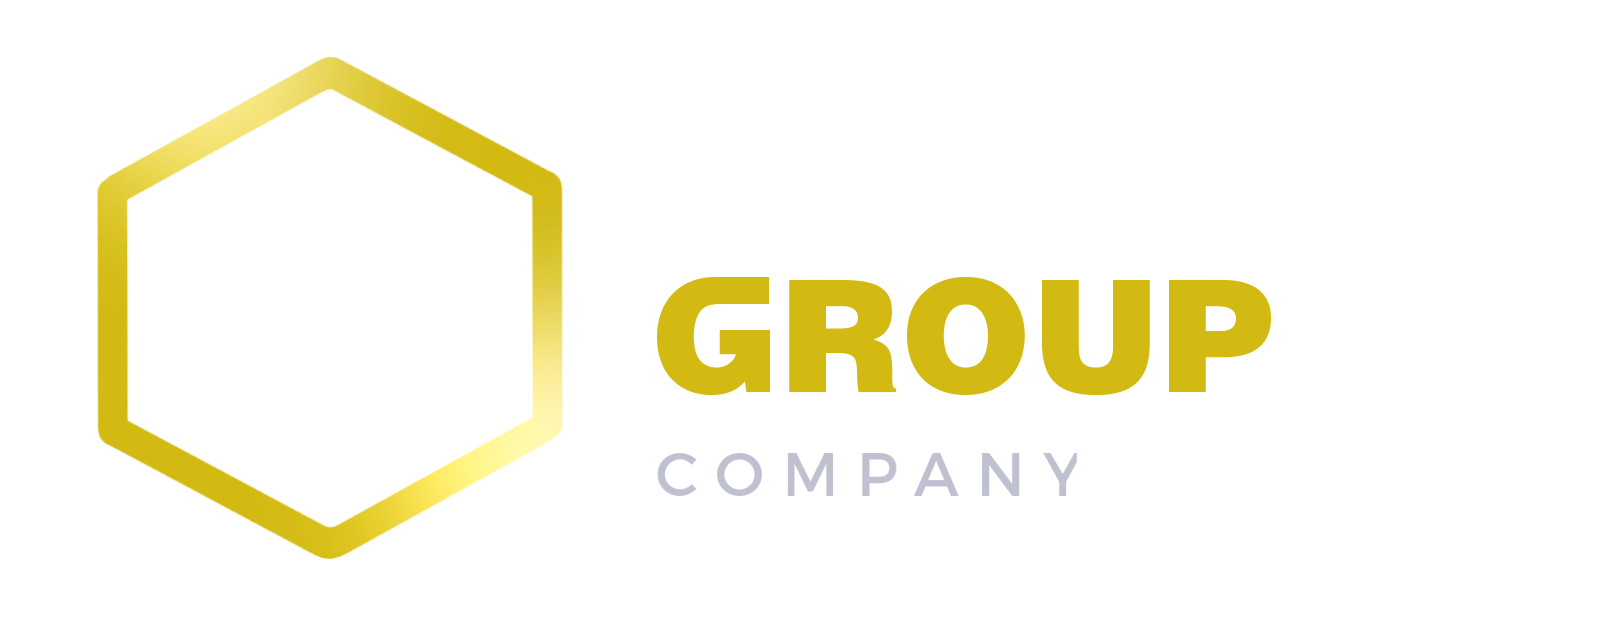 Logistic Group Logo 2